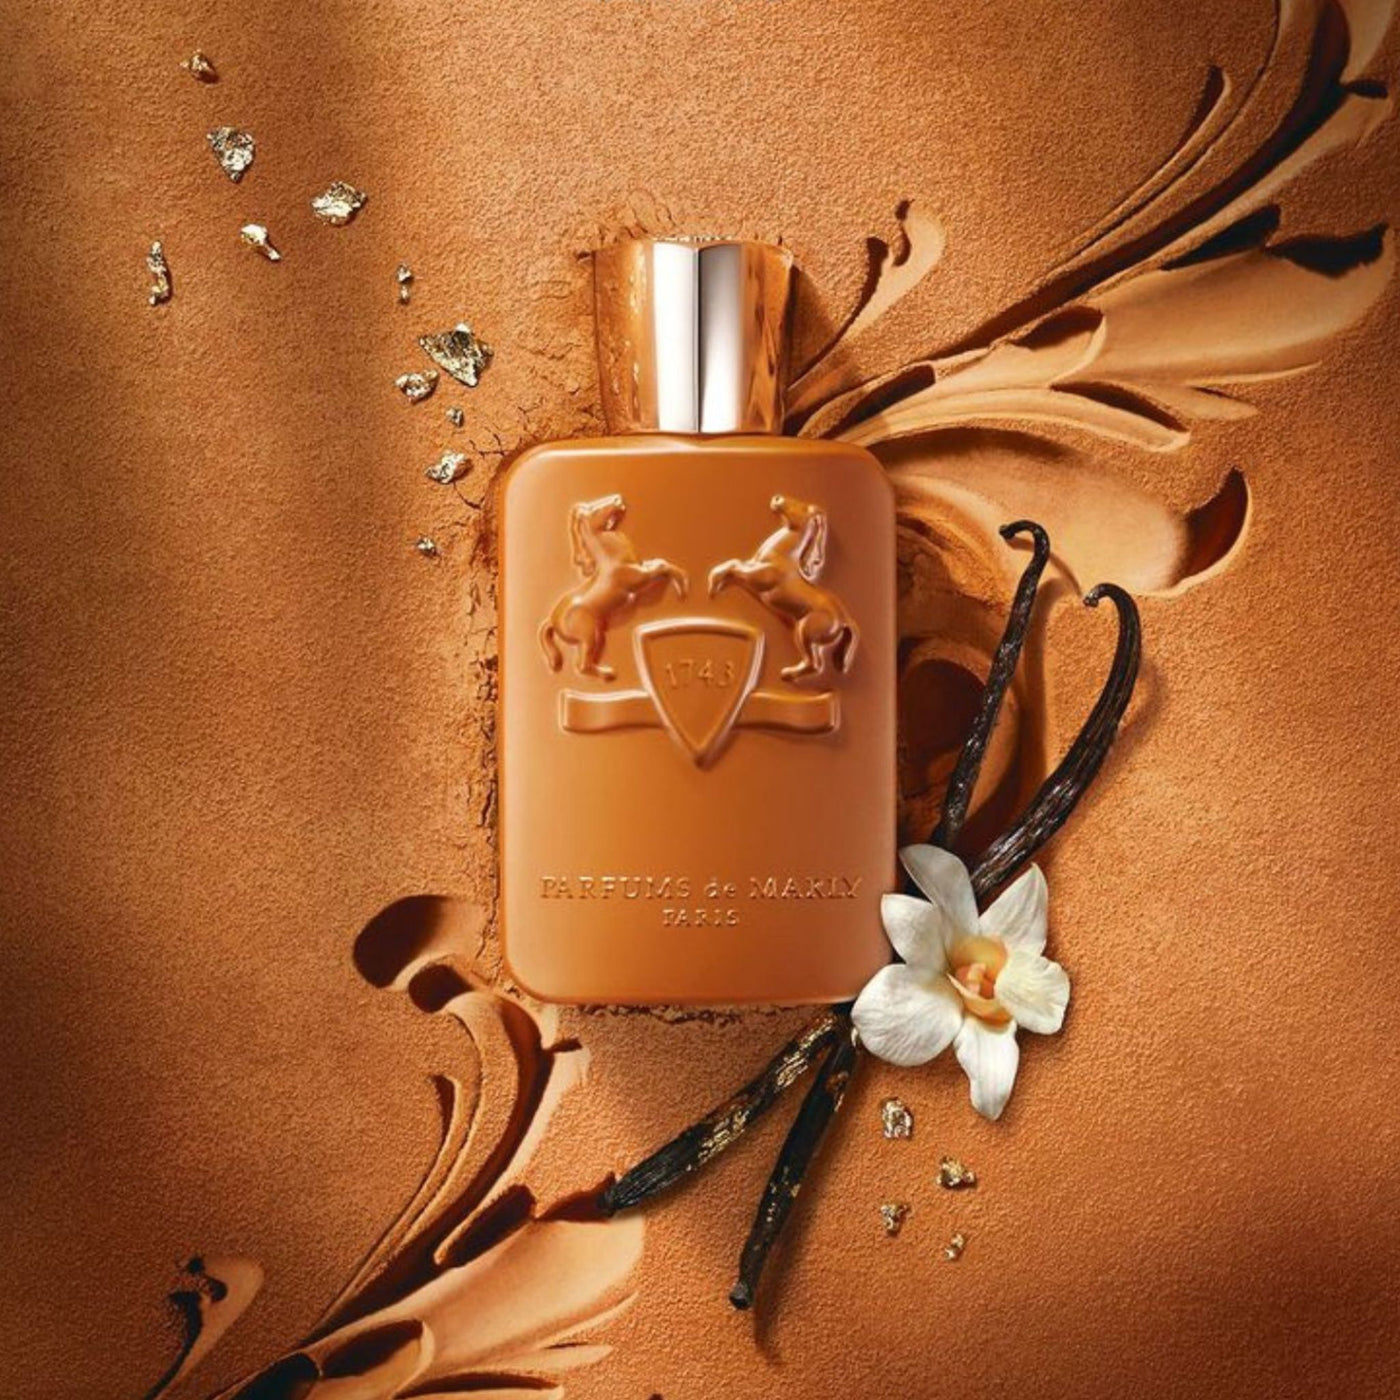 Althair Parfums de Marly Perfume Bottle on Elegant Background